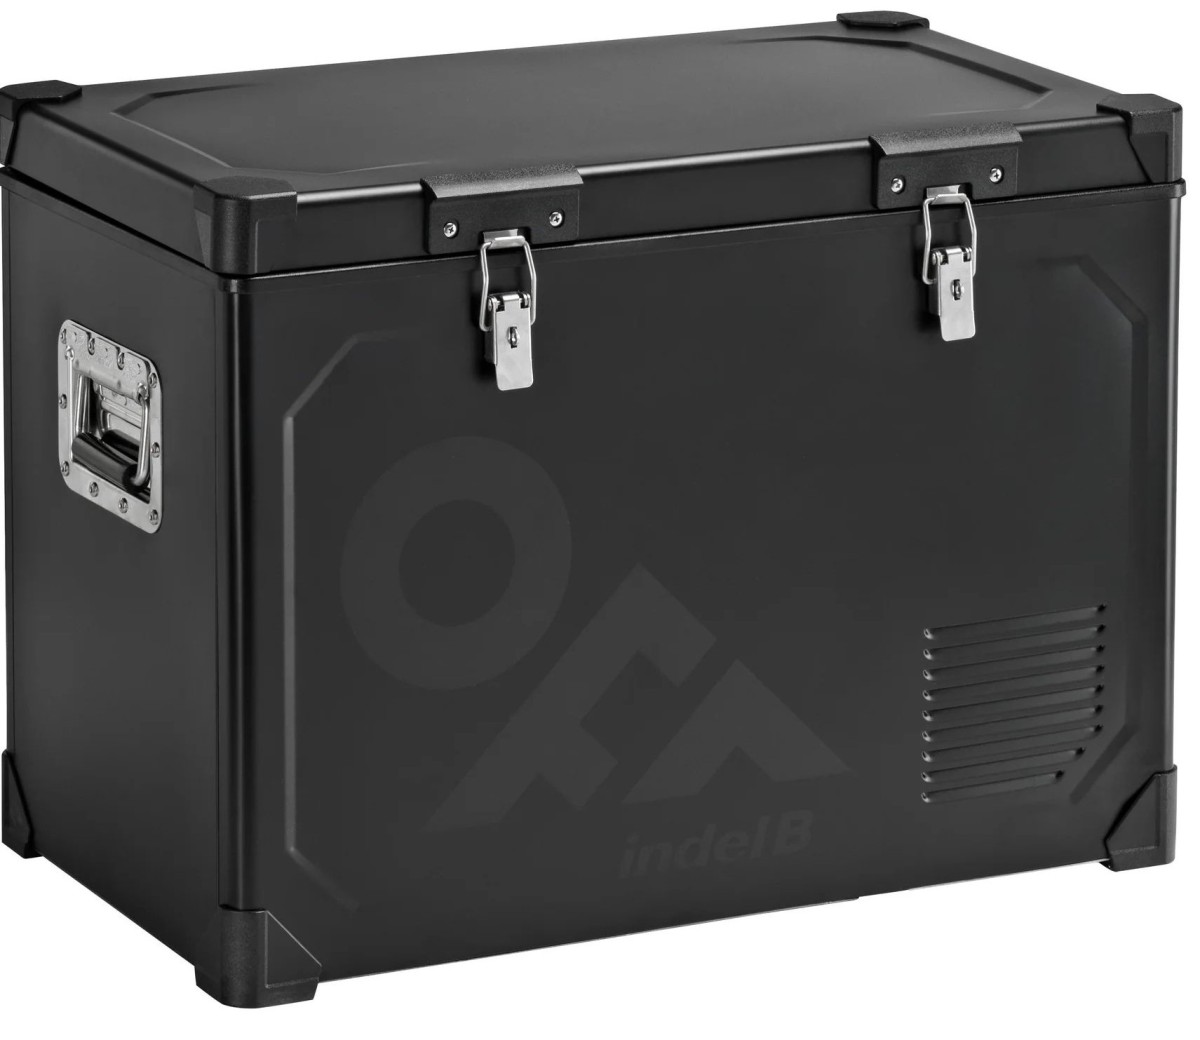 OFF by Indel B TB46 Steel black Portable refrigerator